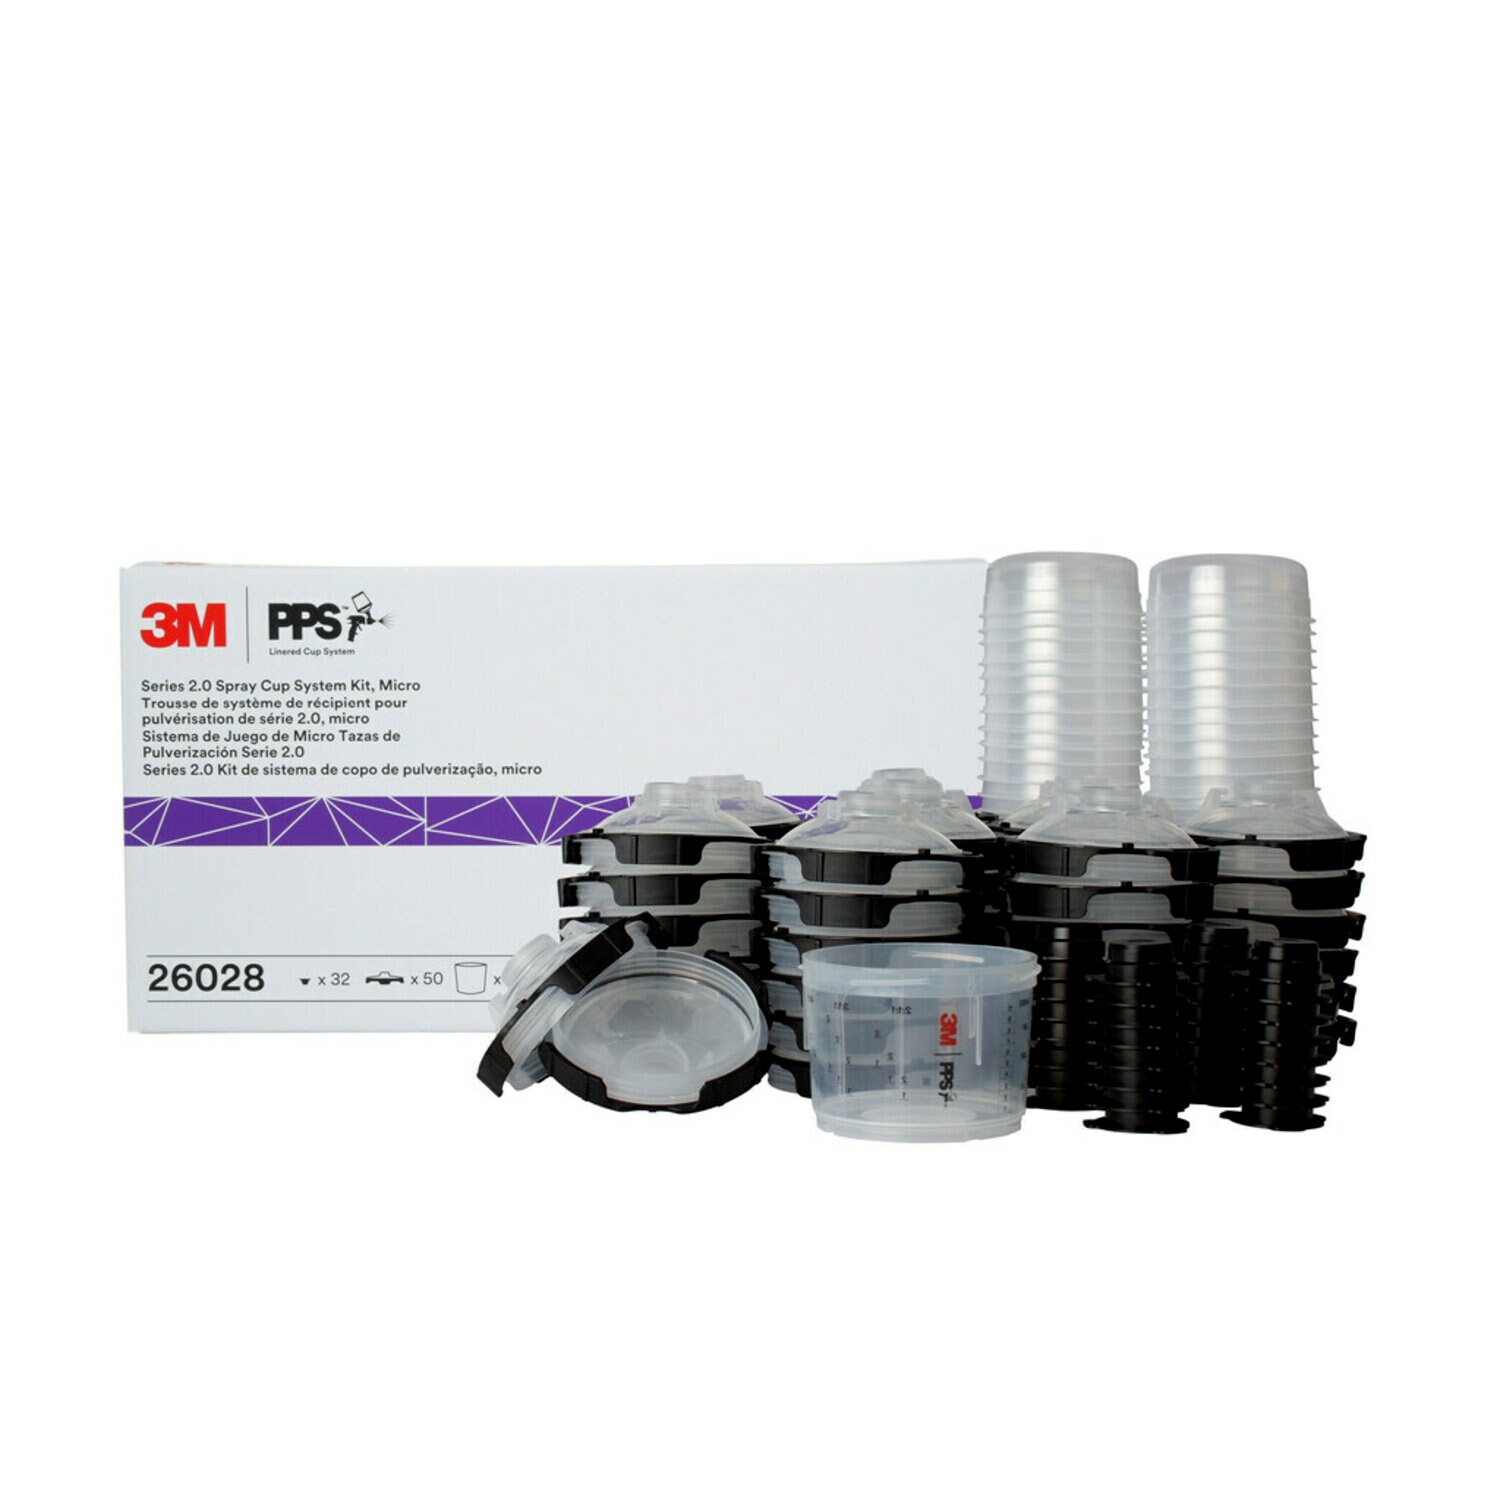 7100134640 - 3M PPS Series 2.0 Spray Cup System Kit, 26028, Micro (3 fl oz, 90 mL),
200 Micron Filter, 1 kit per case